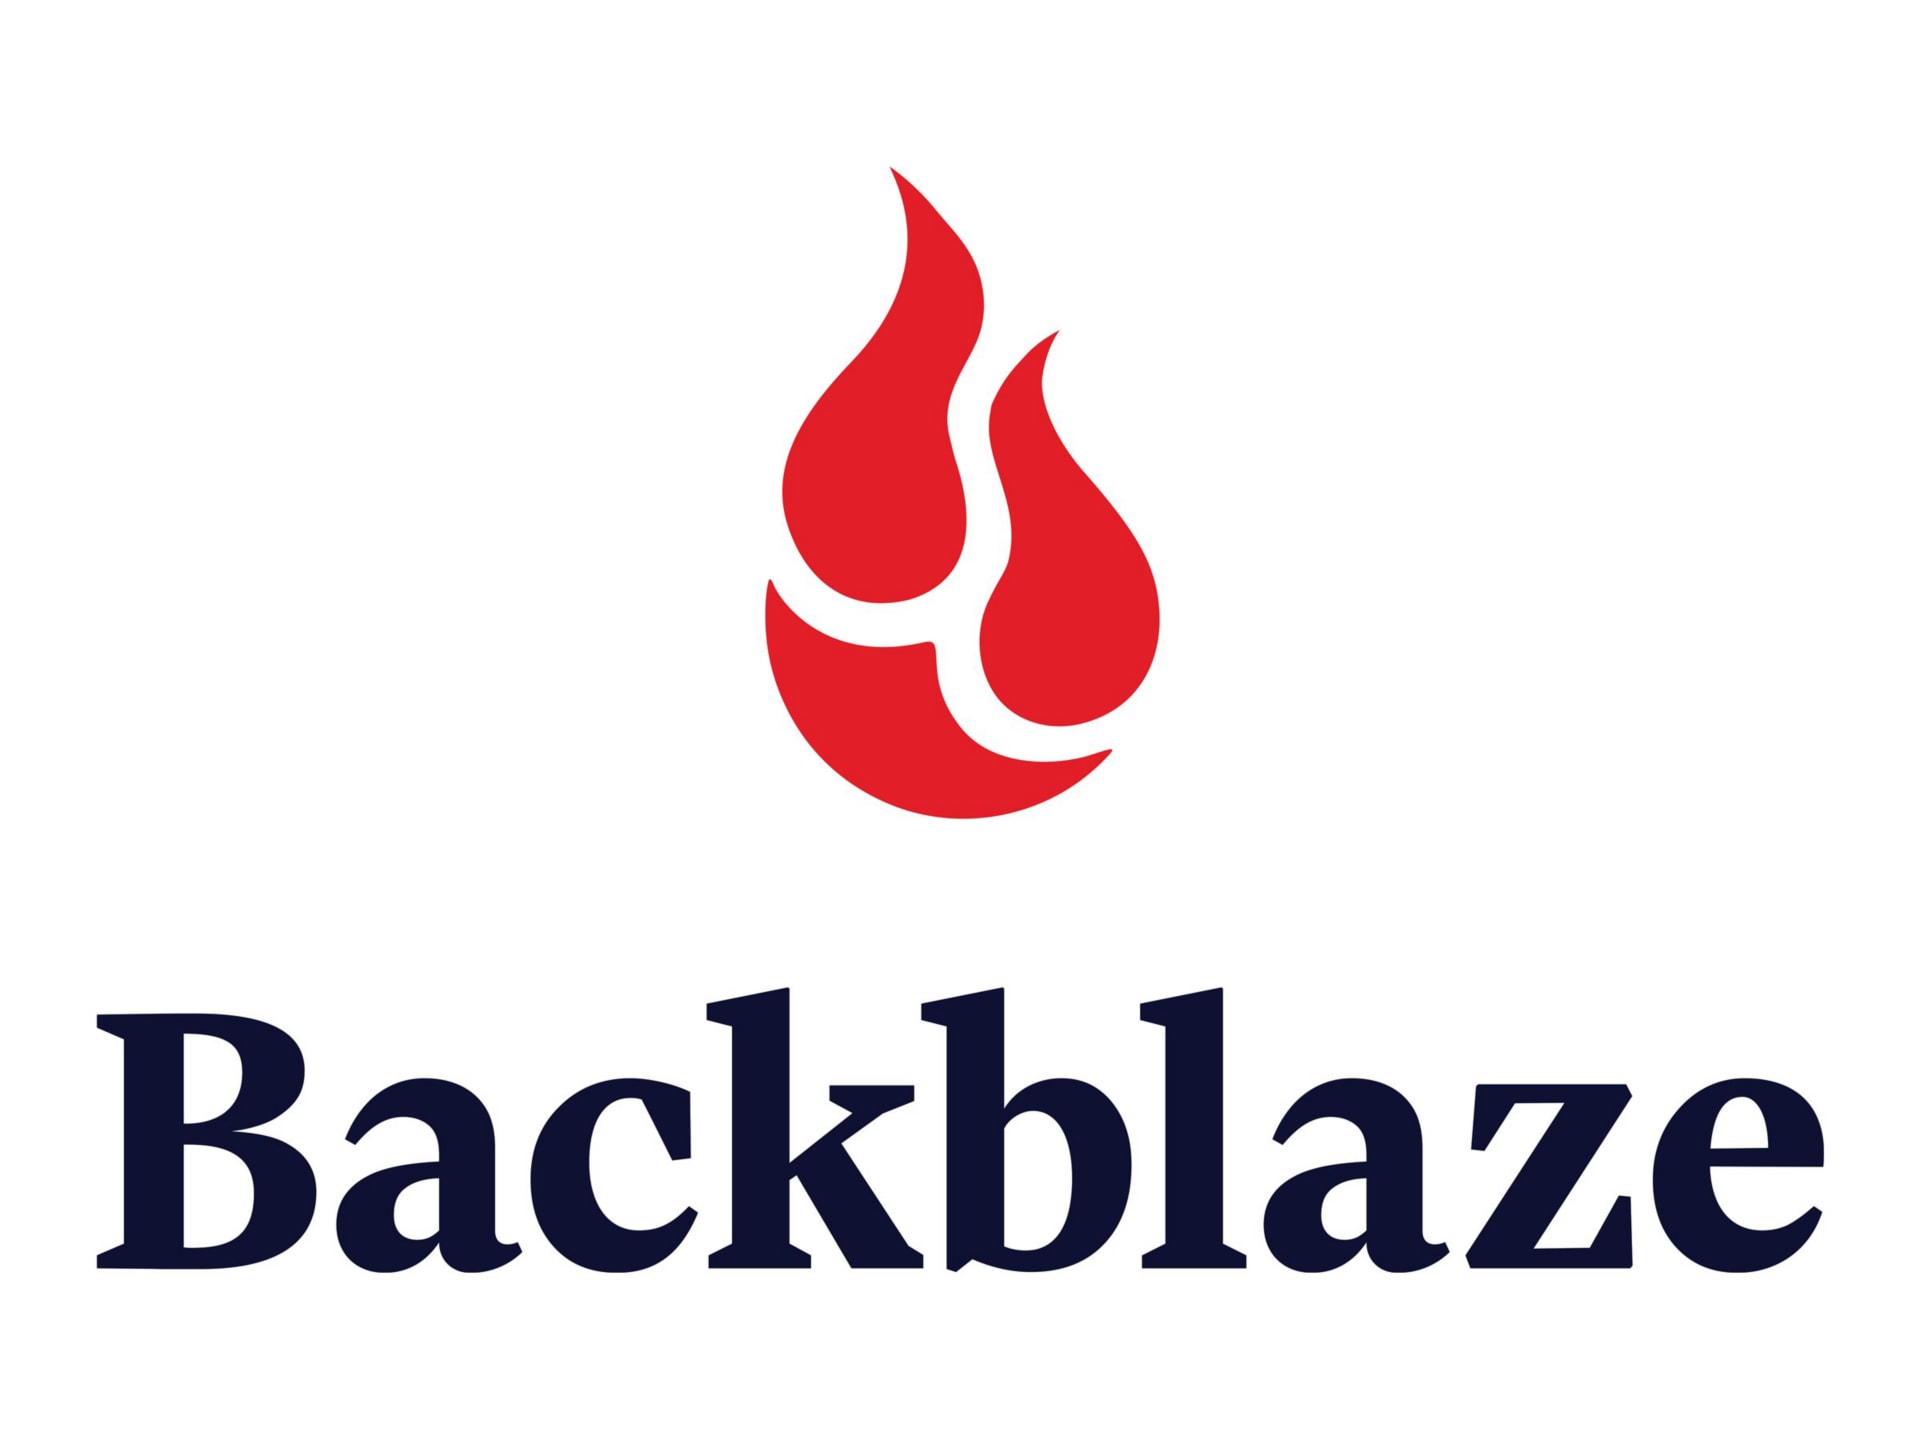 Backblaze B2 Reserve - subscription license (3 years) - 20 TB capacity